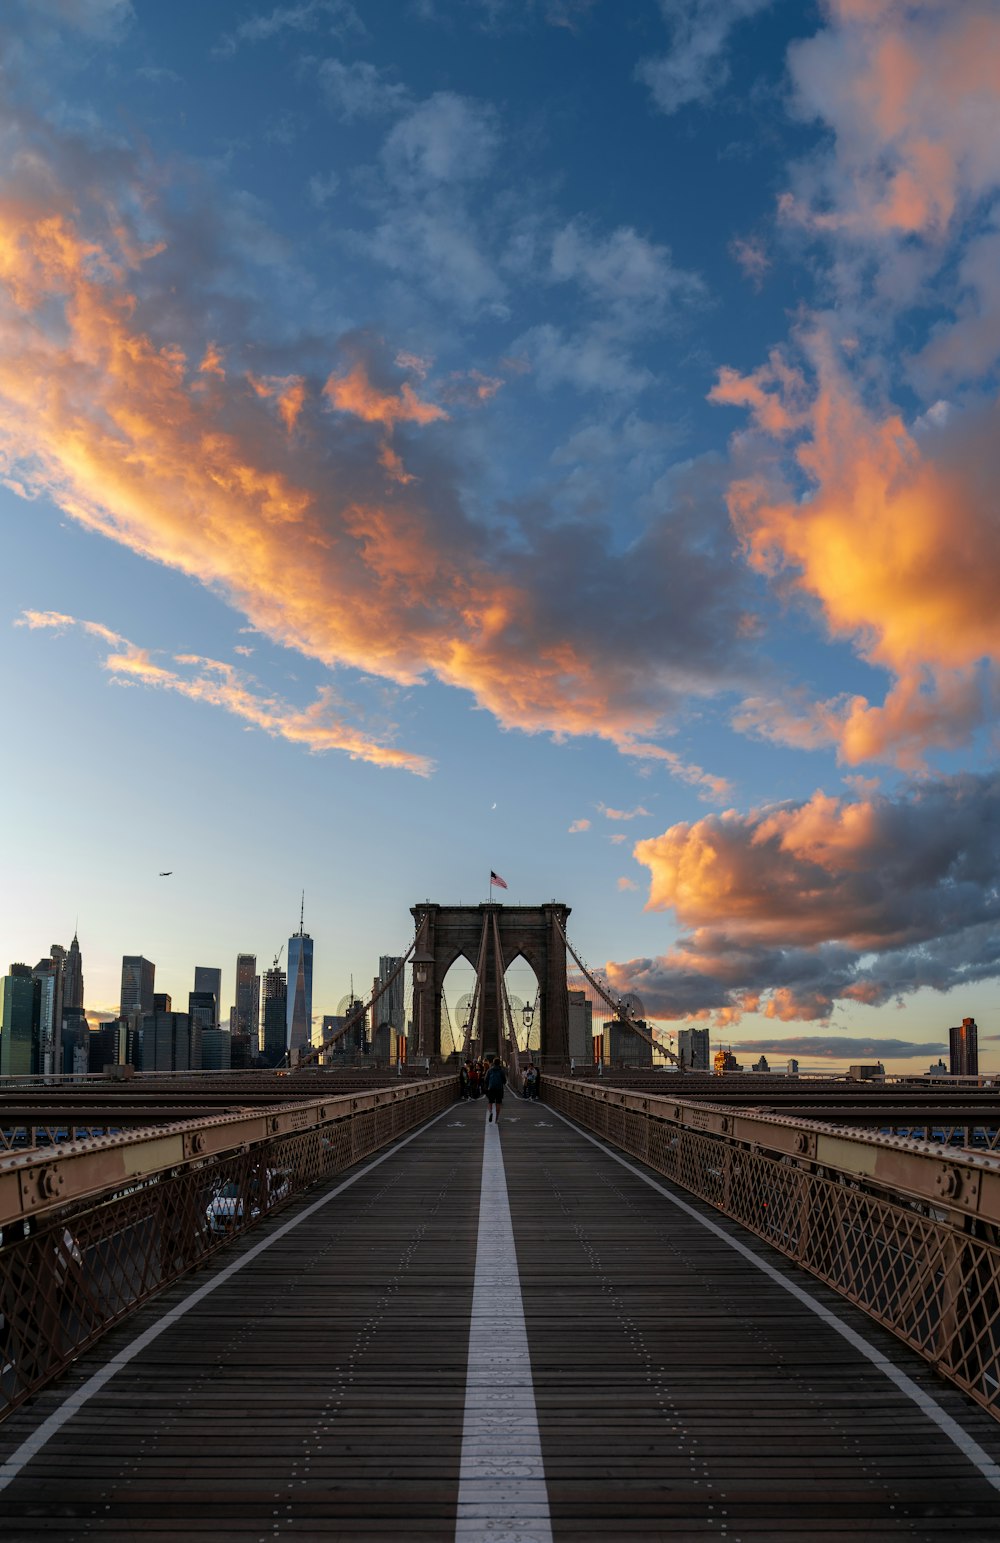 Brooklyn Bridge in New York City under blue and orange skies during daytime